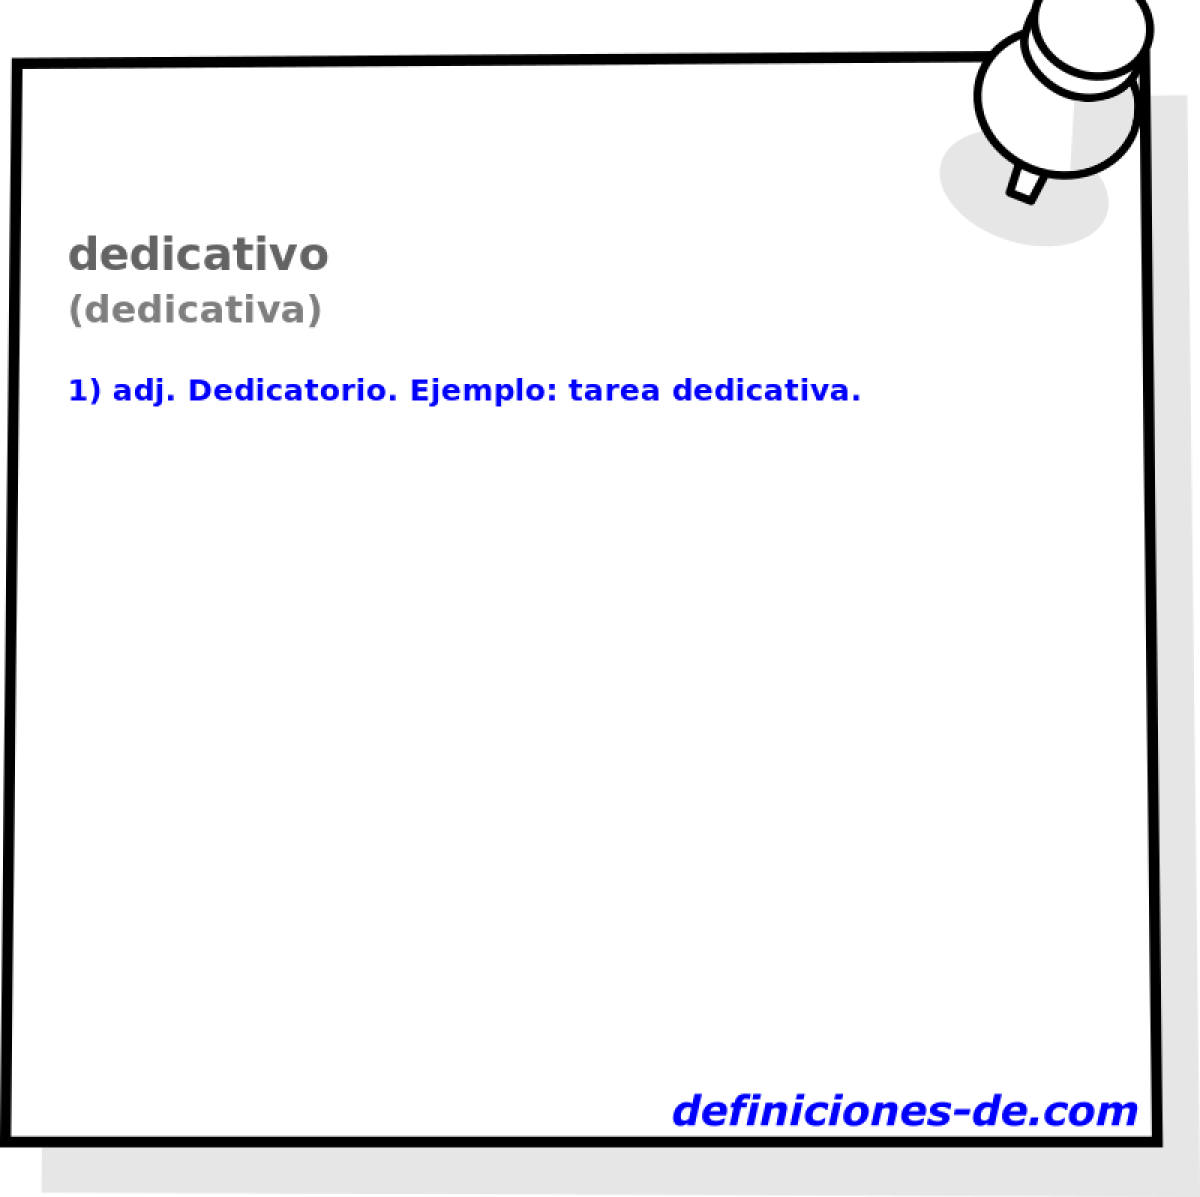 dedicativo (dedicativa)